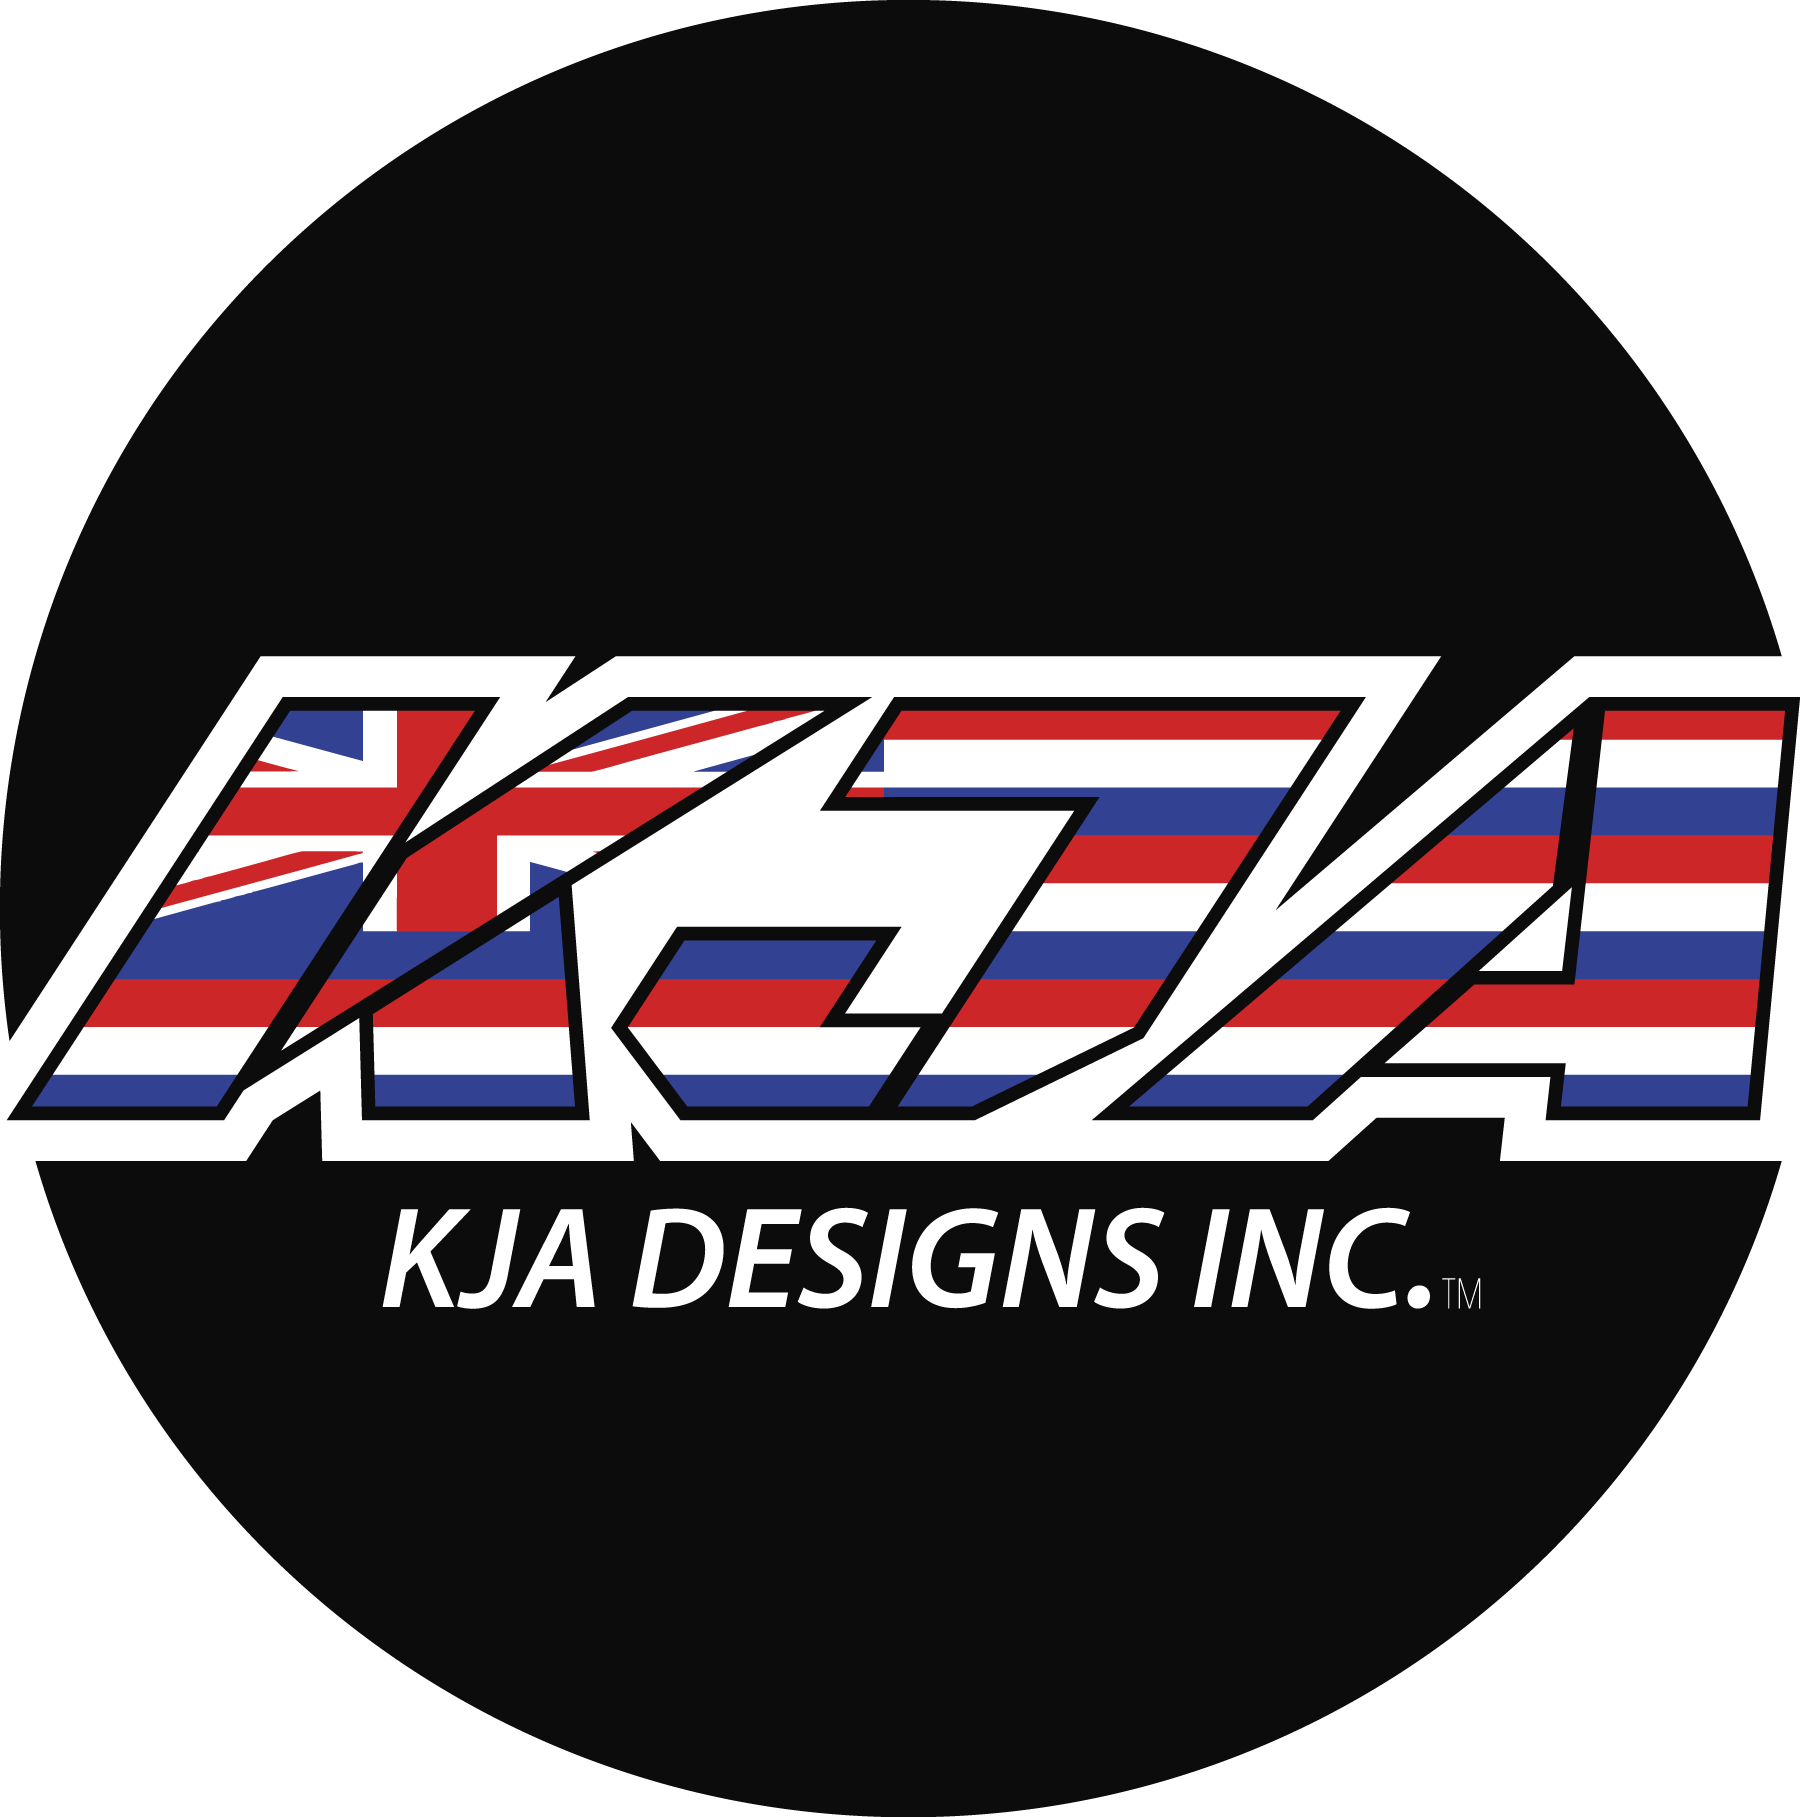 KJA Designs Inc.™ 4B on site